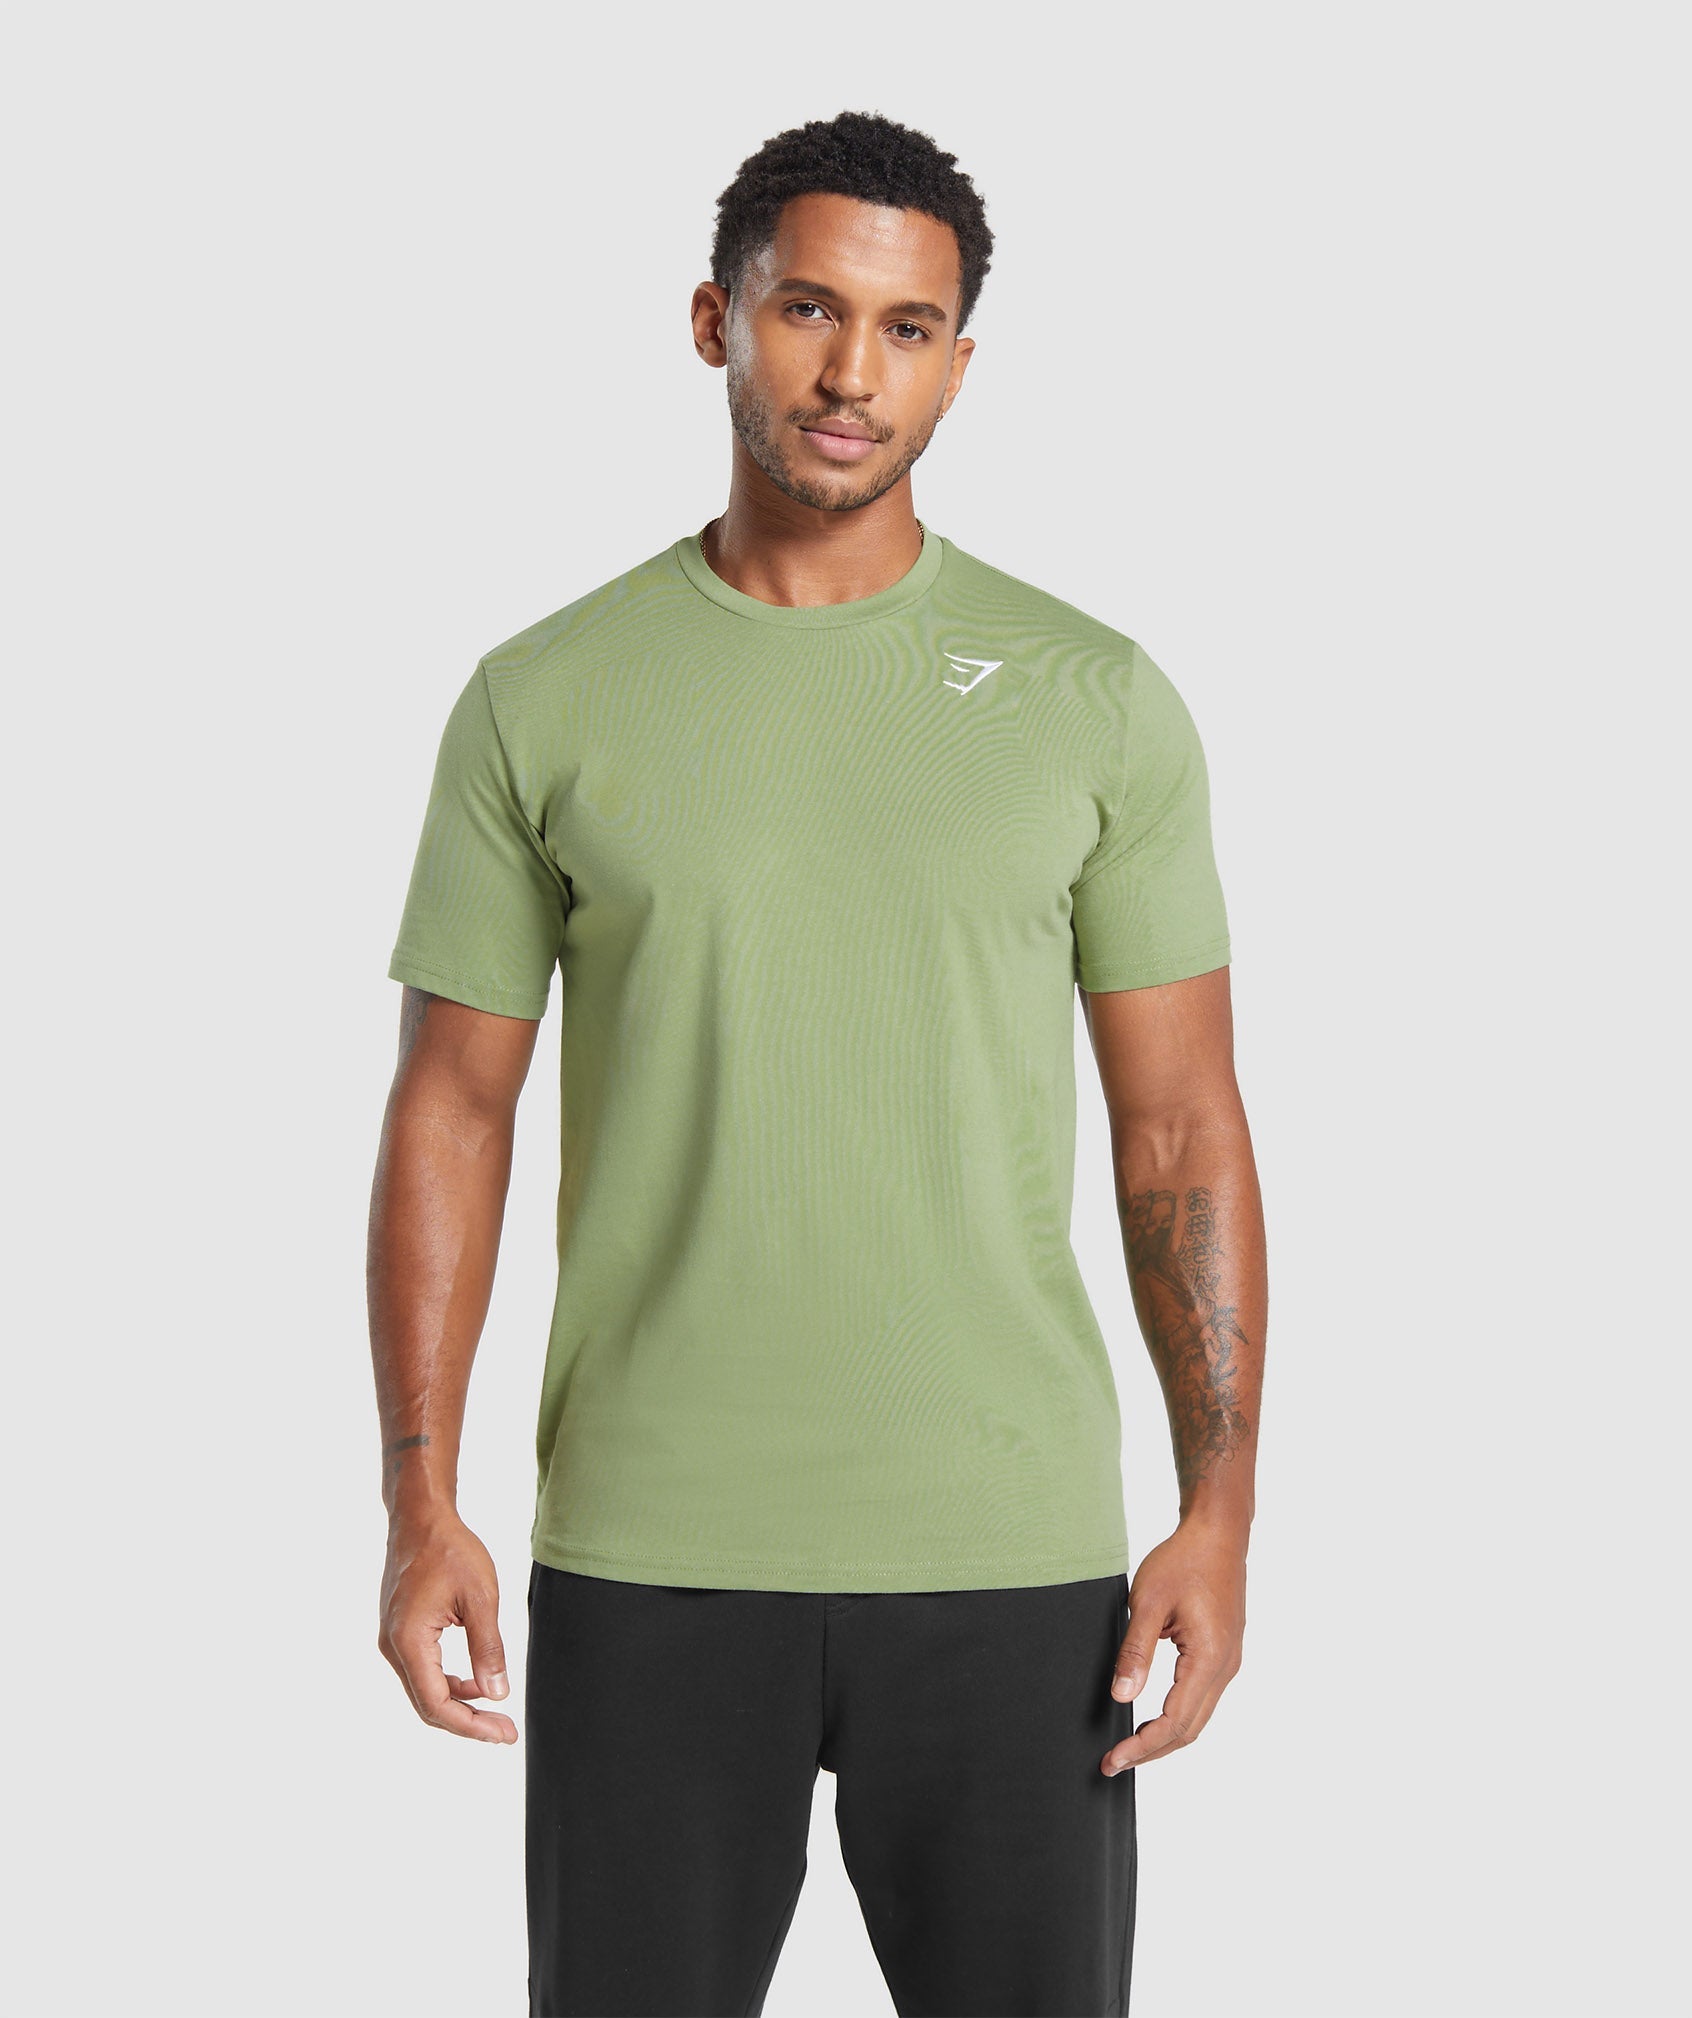 Crest T-Shirt dans Natural Sage Greenest en rupture de stock